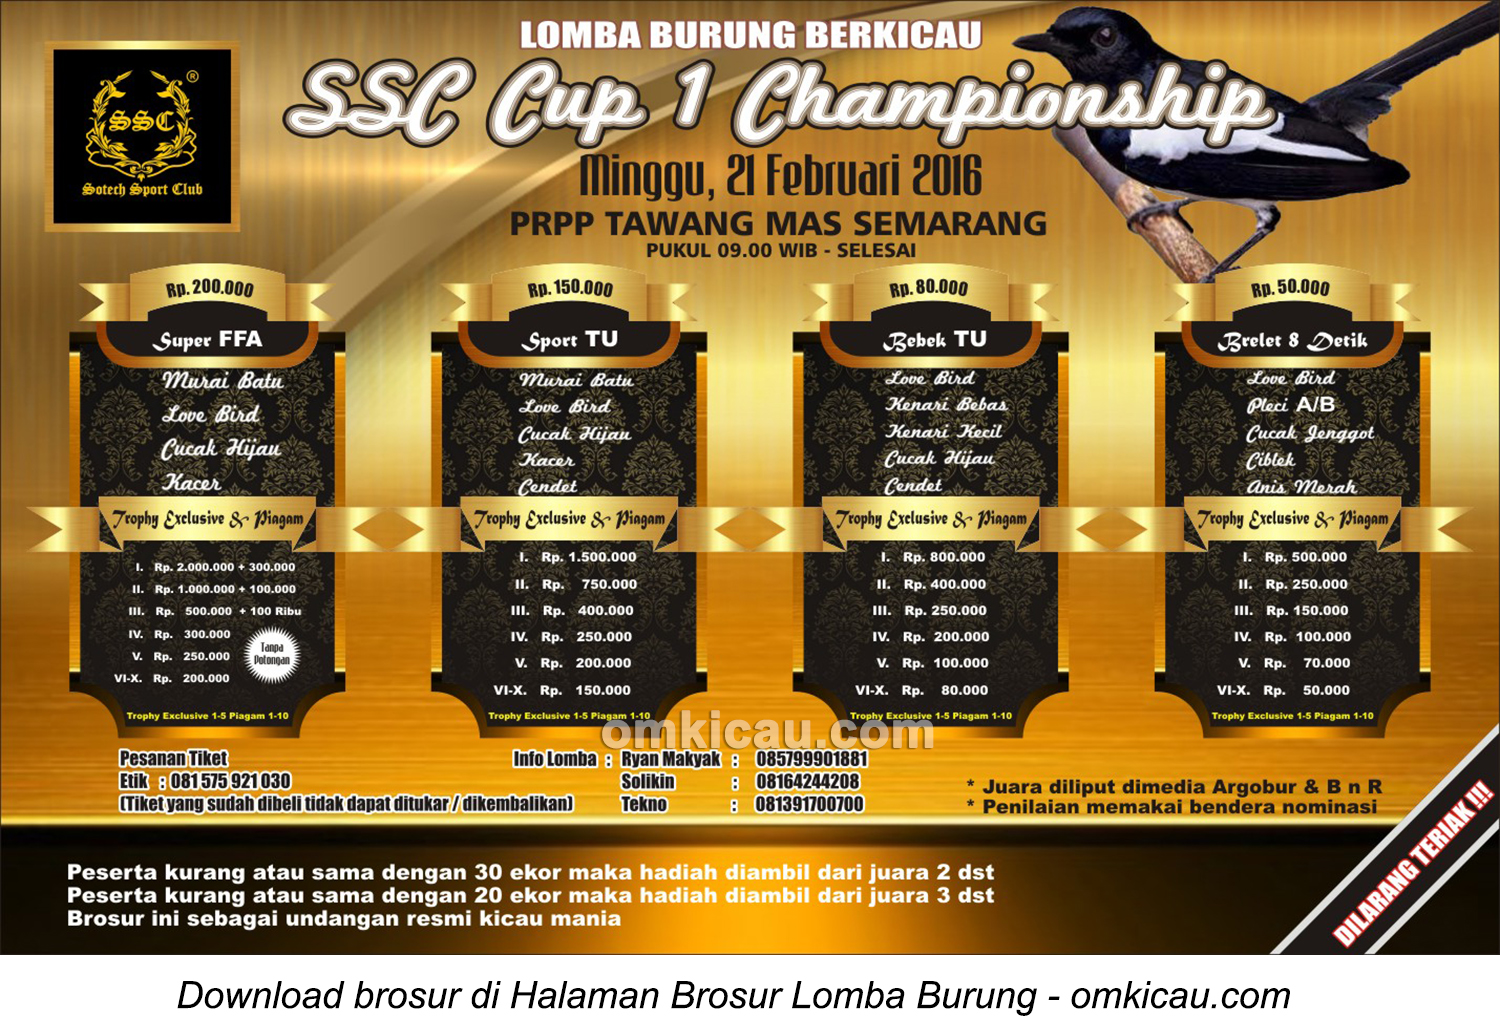 Brosur Lomba Burung Berkicau SSC Cup 1 Championship, Semarang, 21 Februari 2016